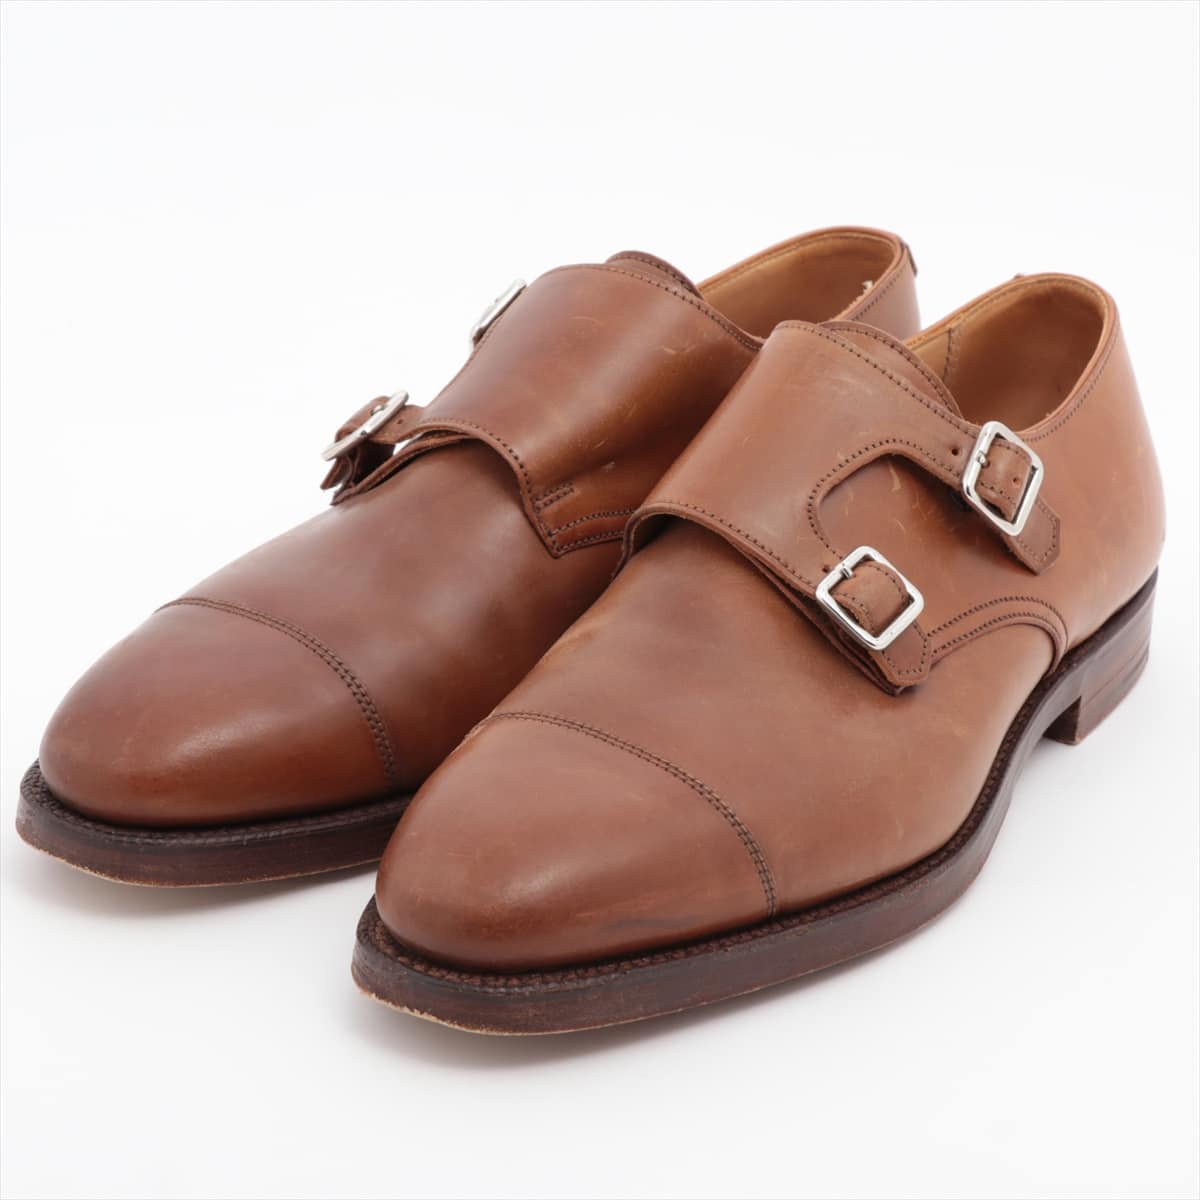 Crockett & Jones Leather Leather shoes 7 1/2E Men's Brown LOWNDES 2 Lowndes Double monk strap